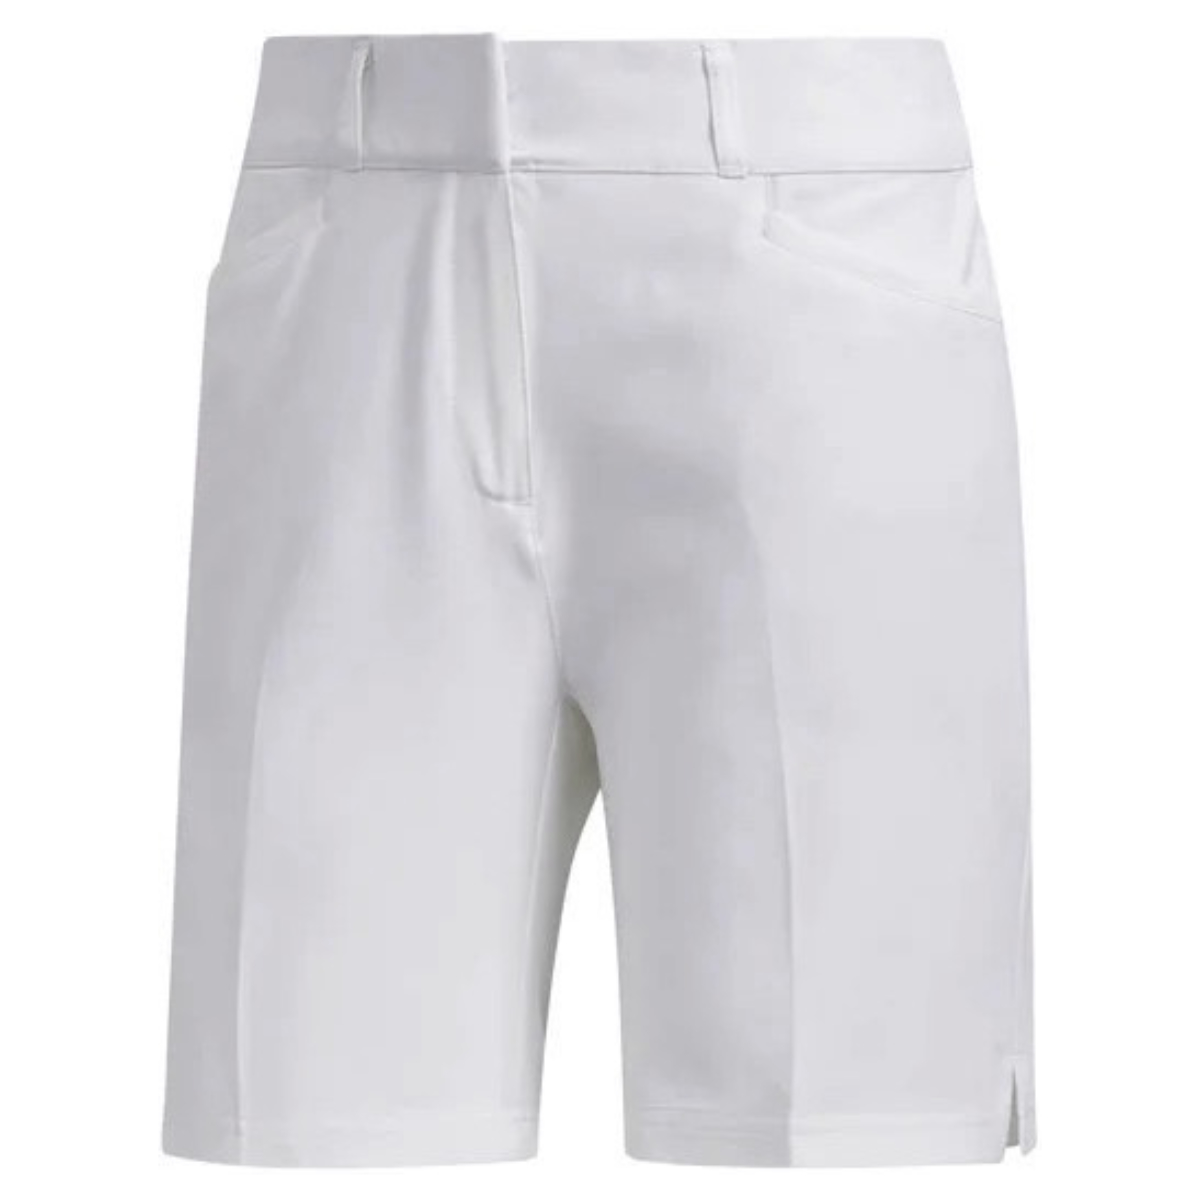 Adidas Ladies 7 Inch Shorts White